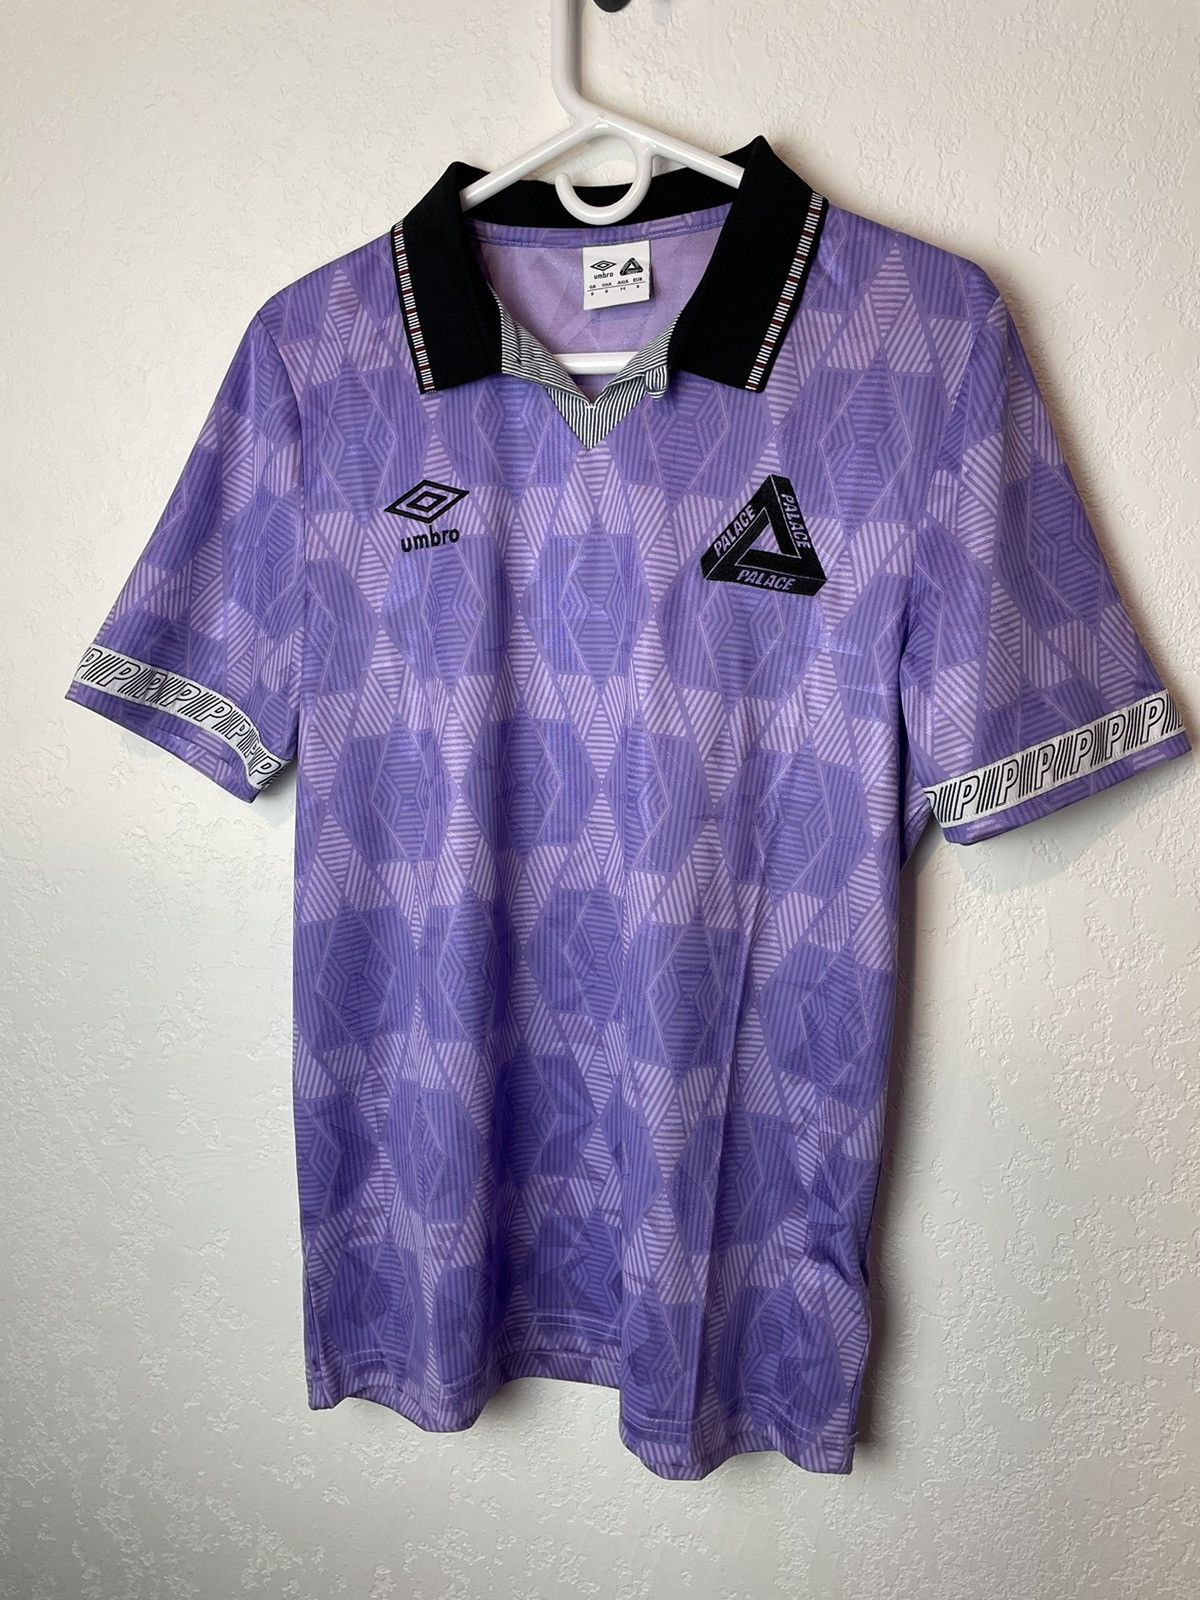 Palace Classic jersey purple | Grailed